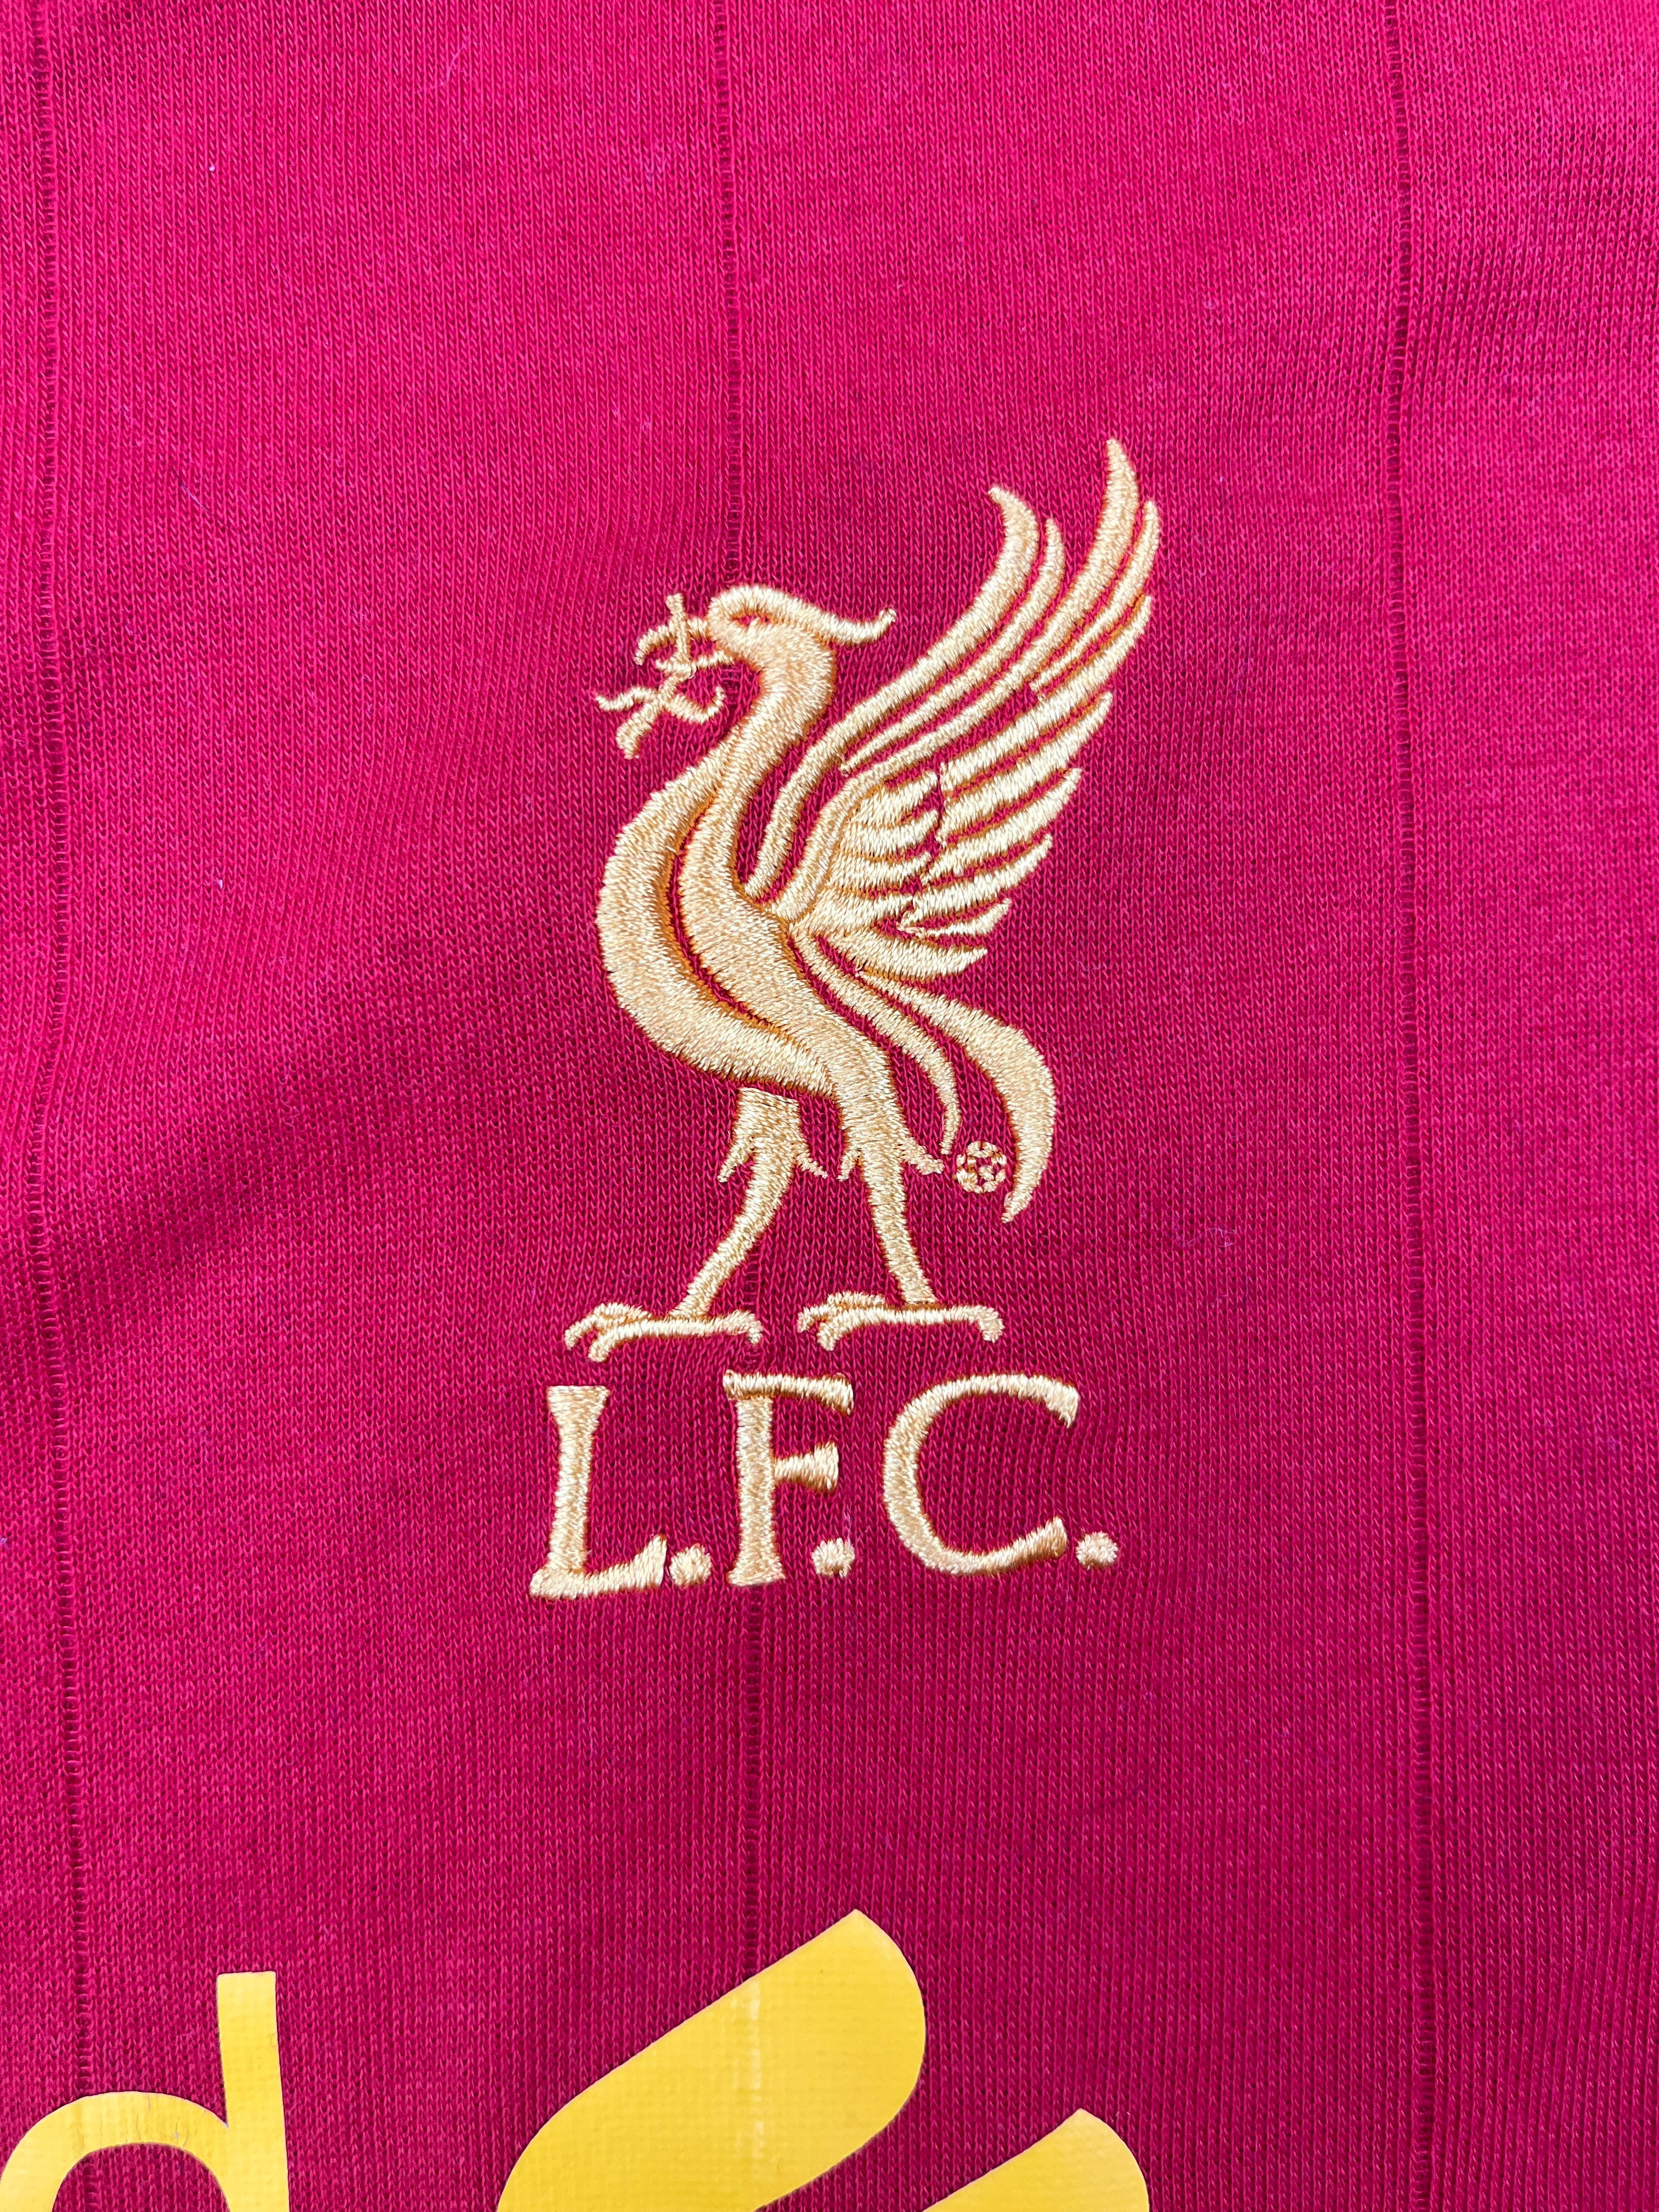 2012/13 Liverpool Home Shirt (L) 9/10